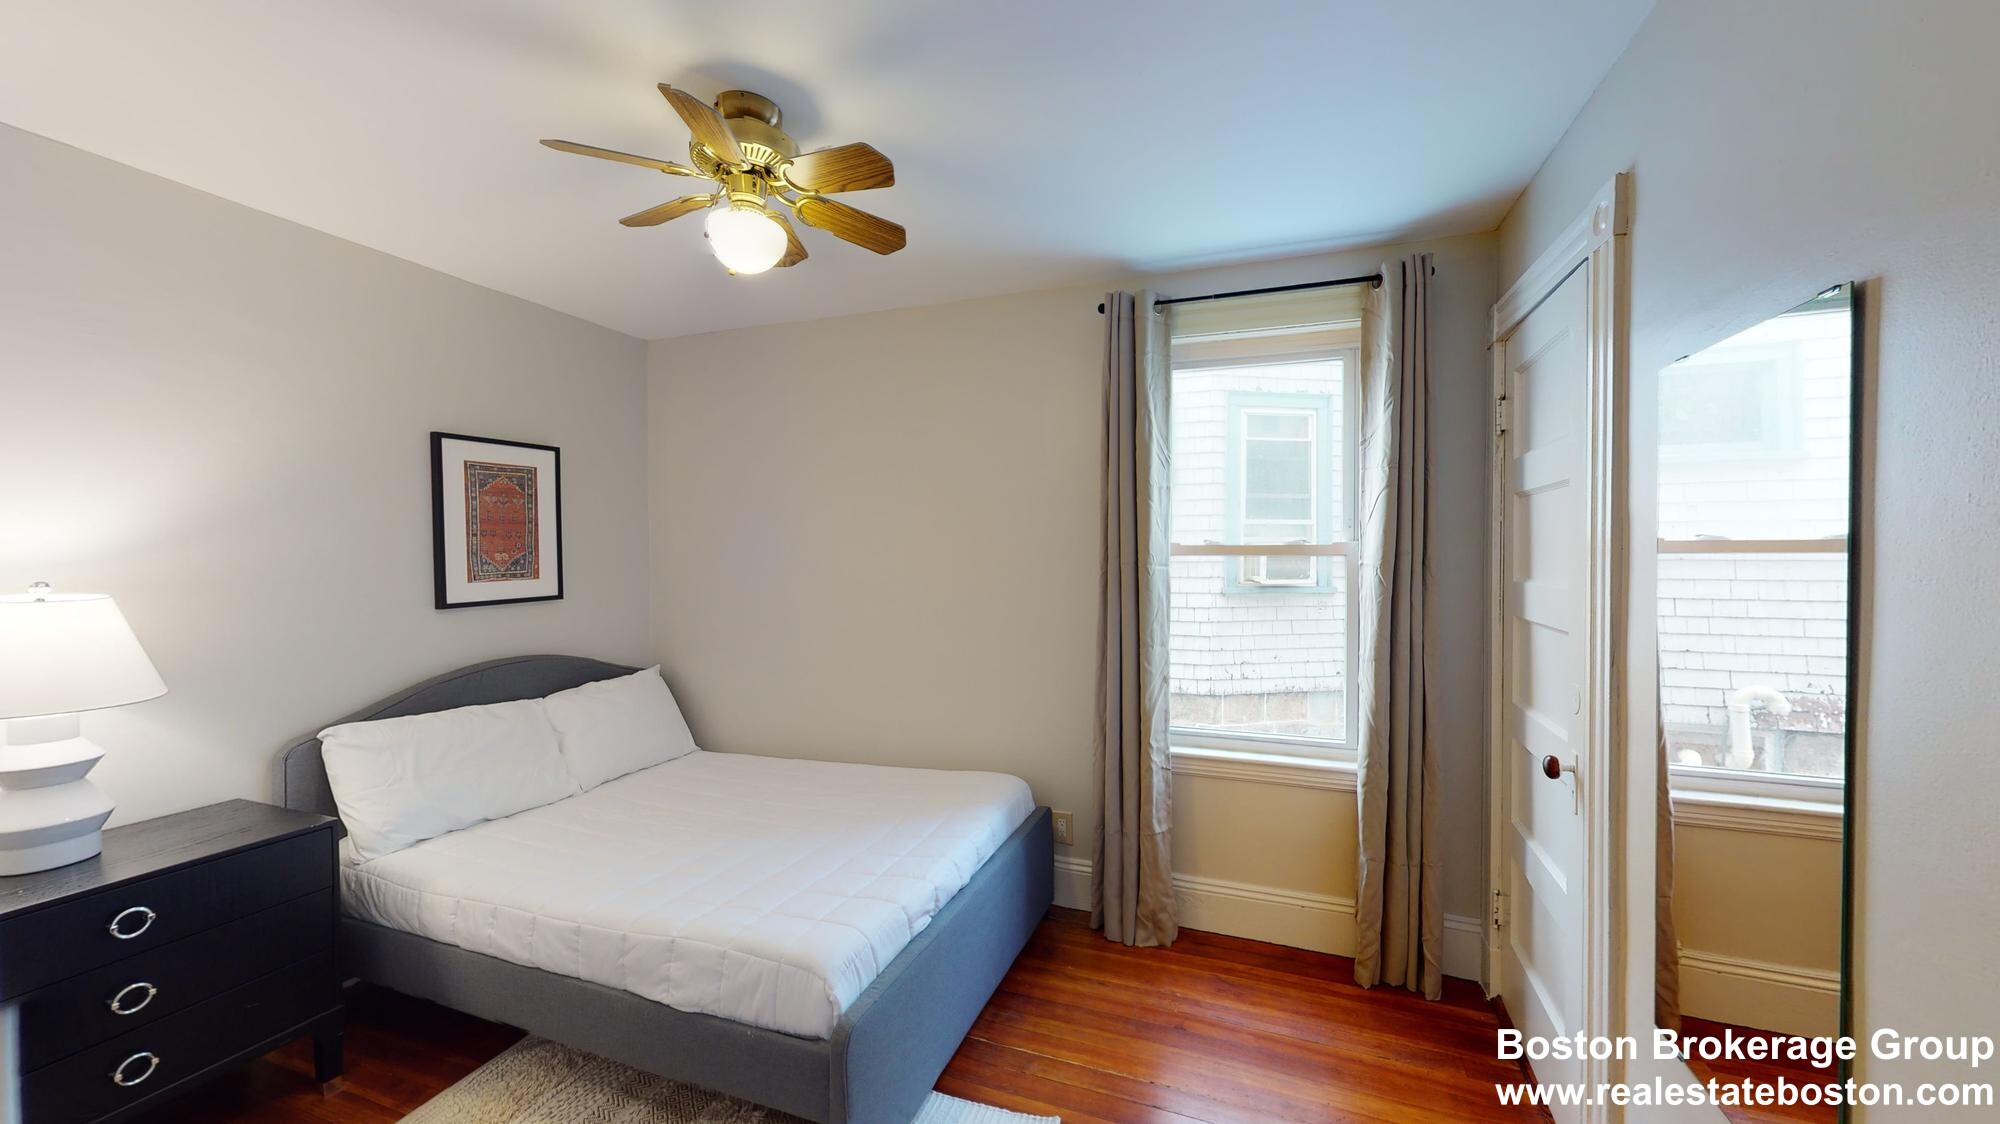 Photos of apartment on Roseclair,Boston MA 02125